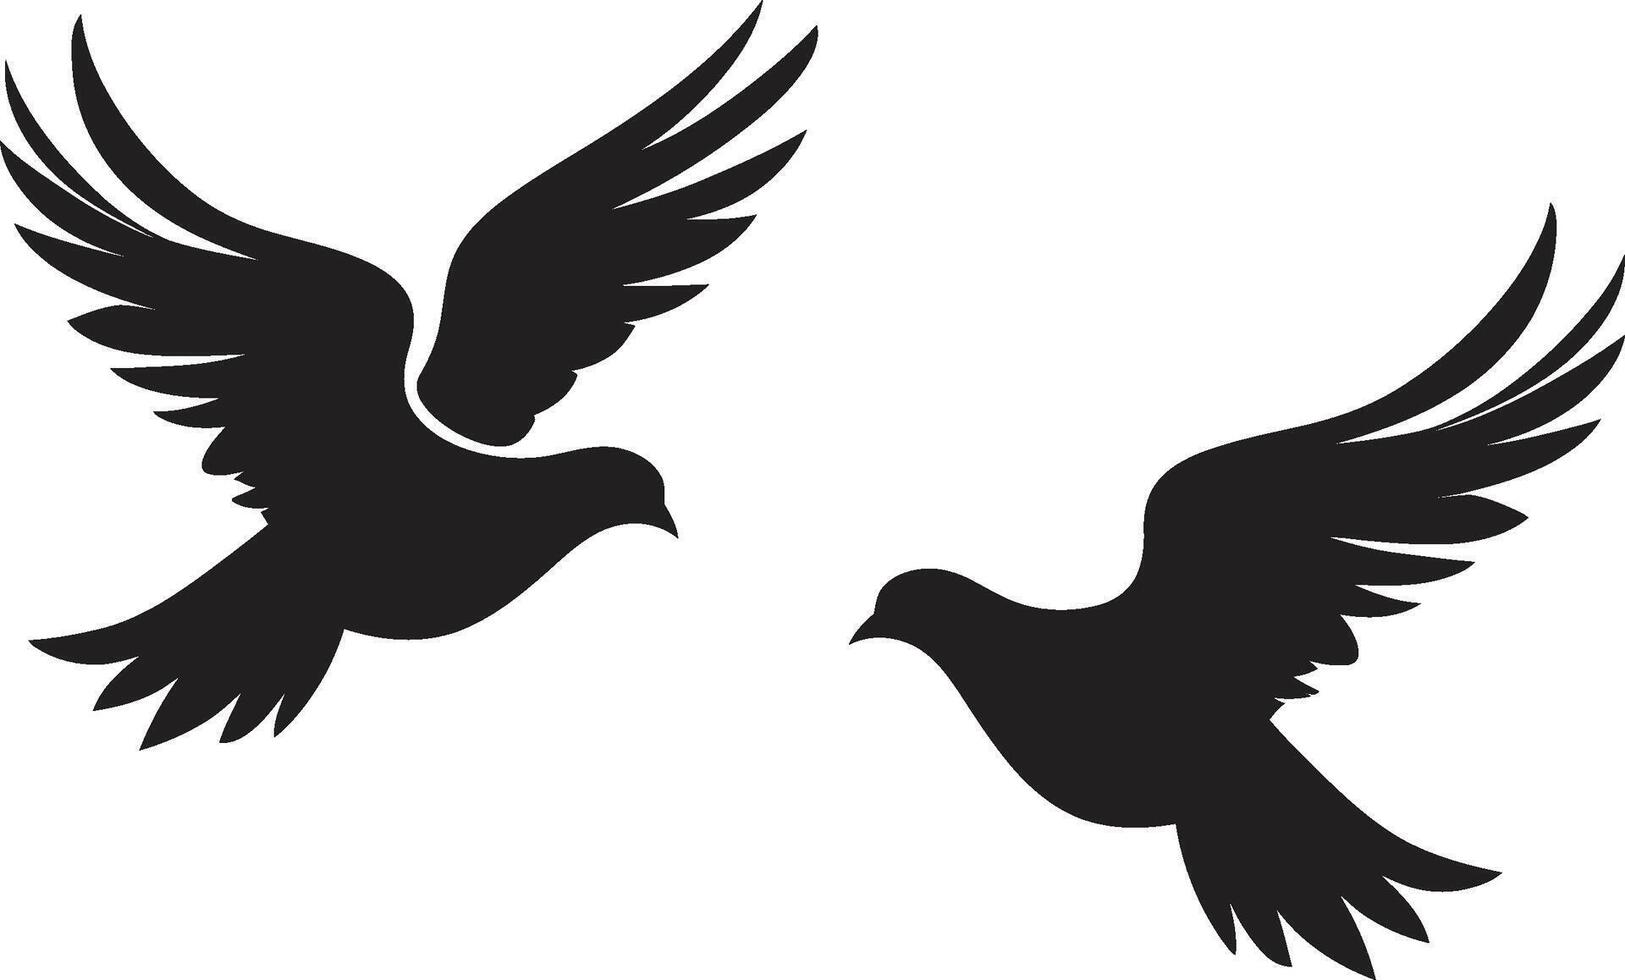 Flight of Love Dove Pair Emblem Endless Embrace of a Dove Pair vector